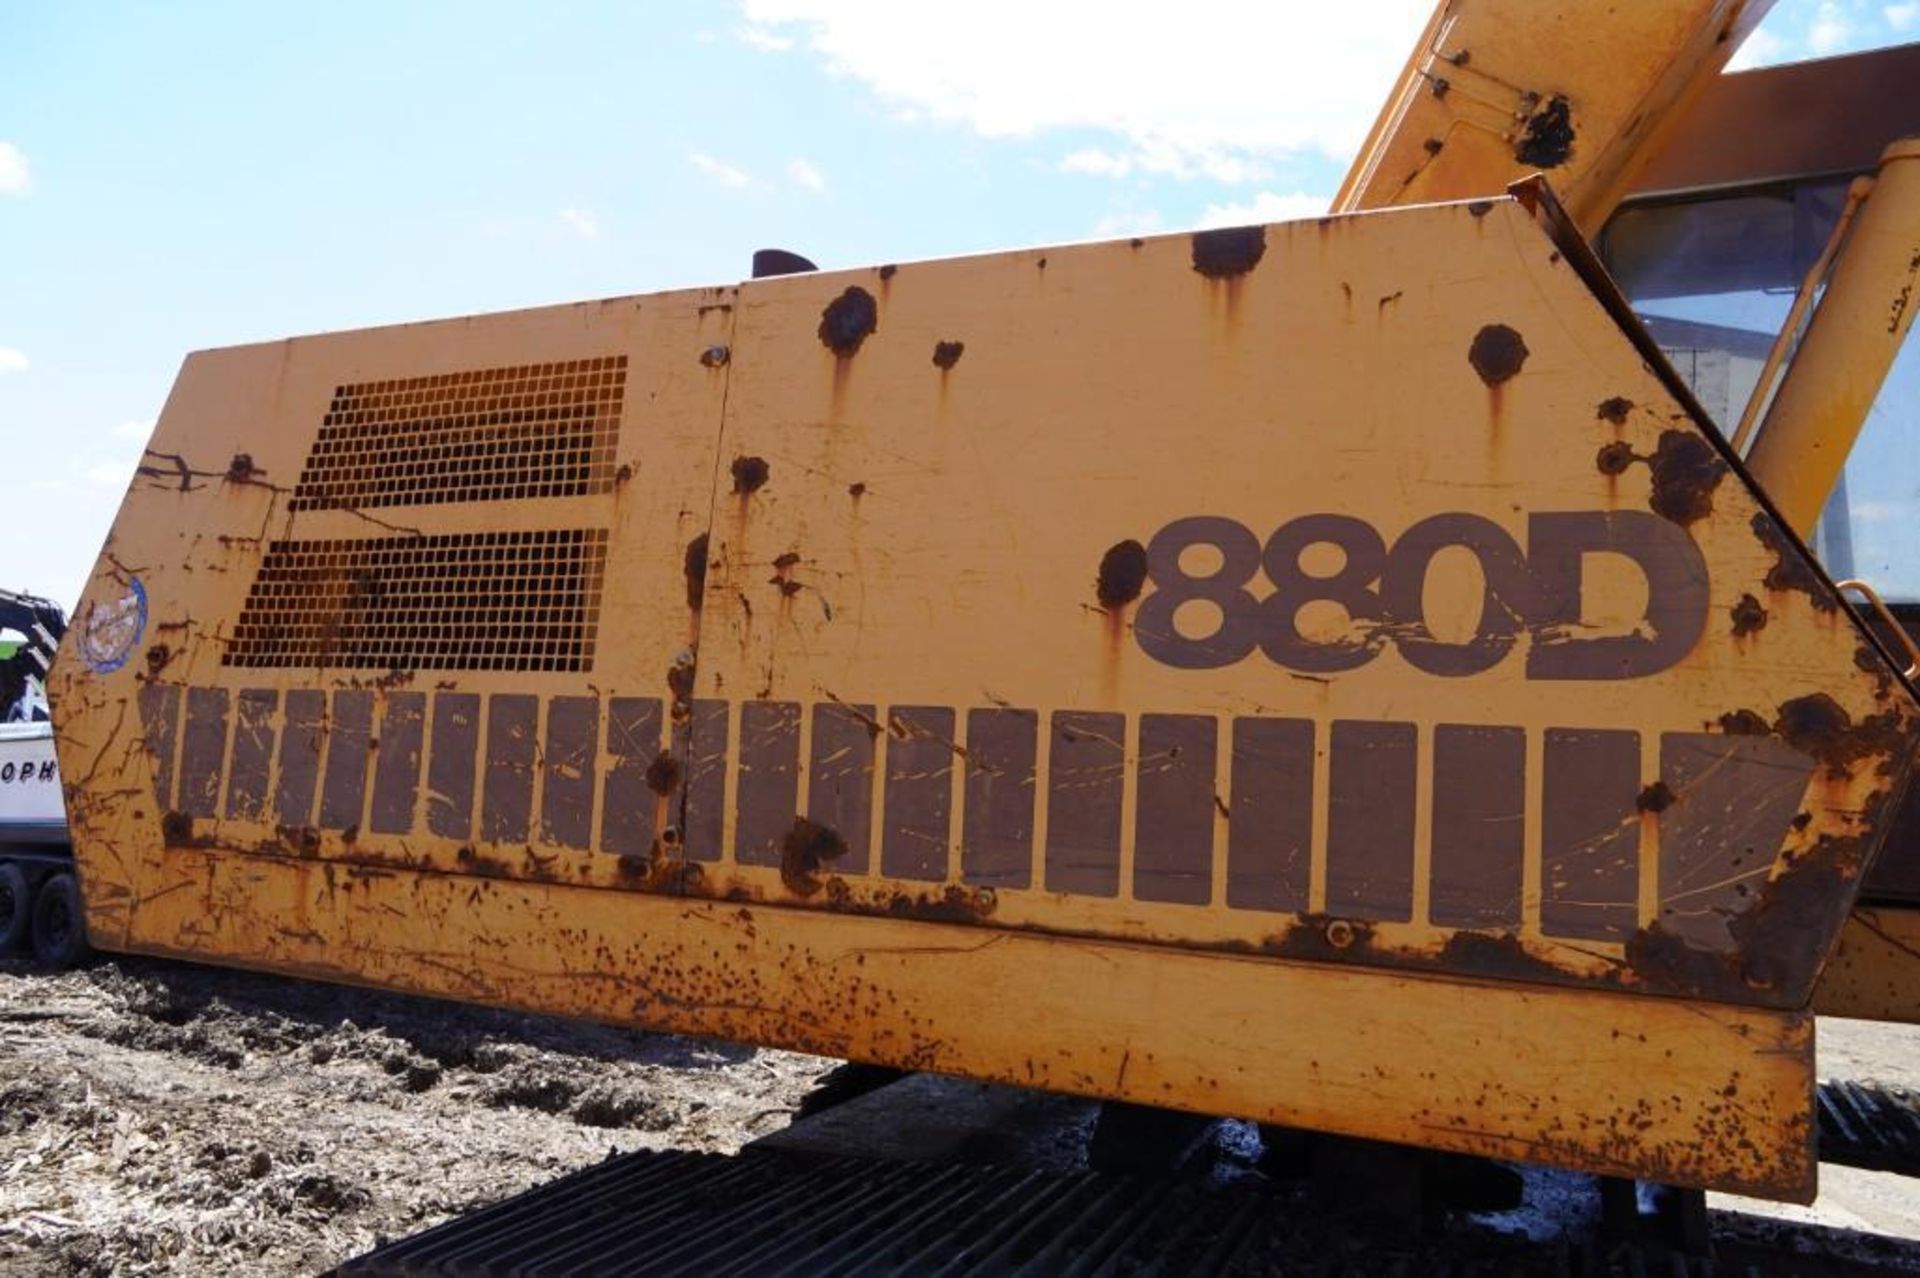 Case 880D Excavator - Image 39 of 53